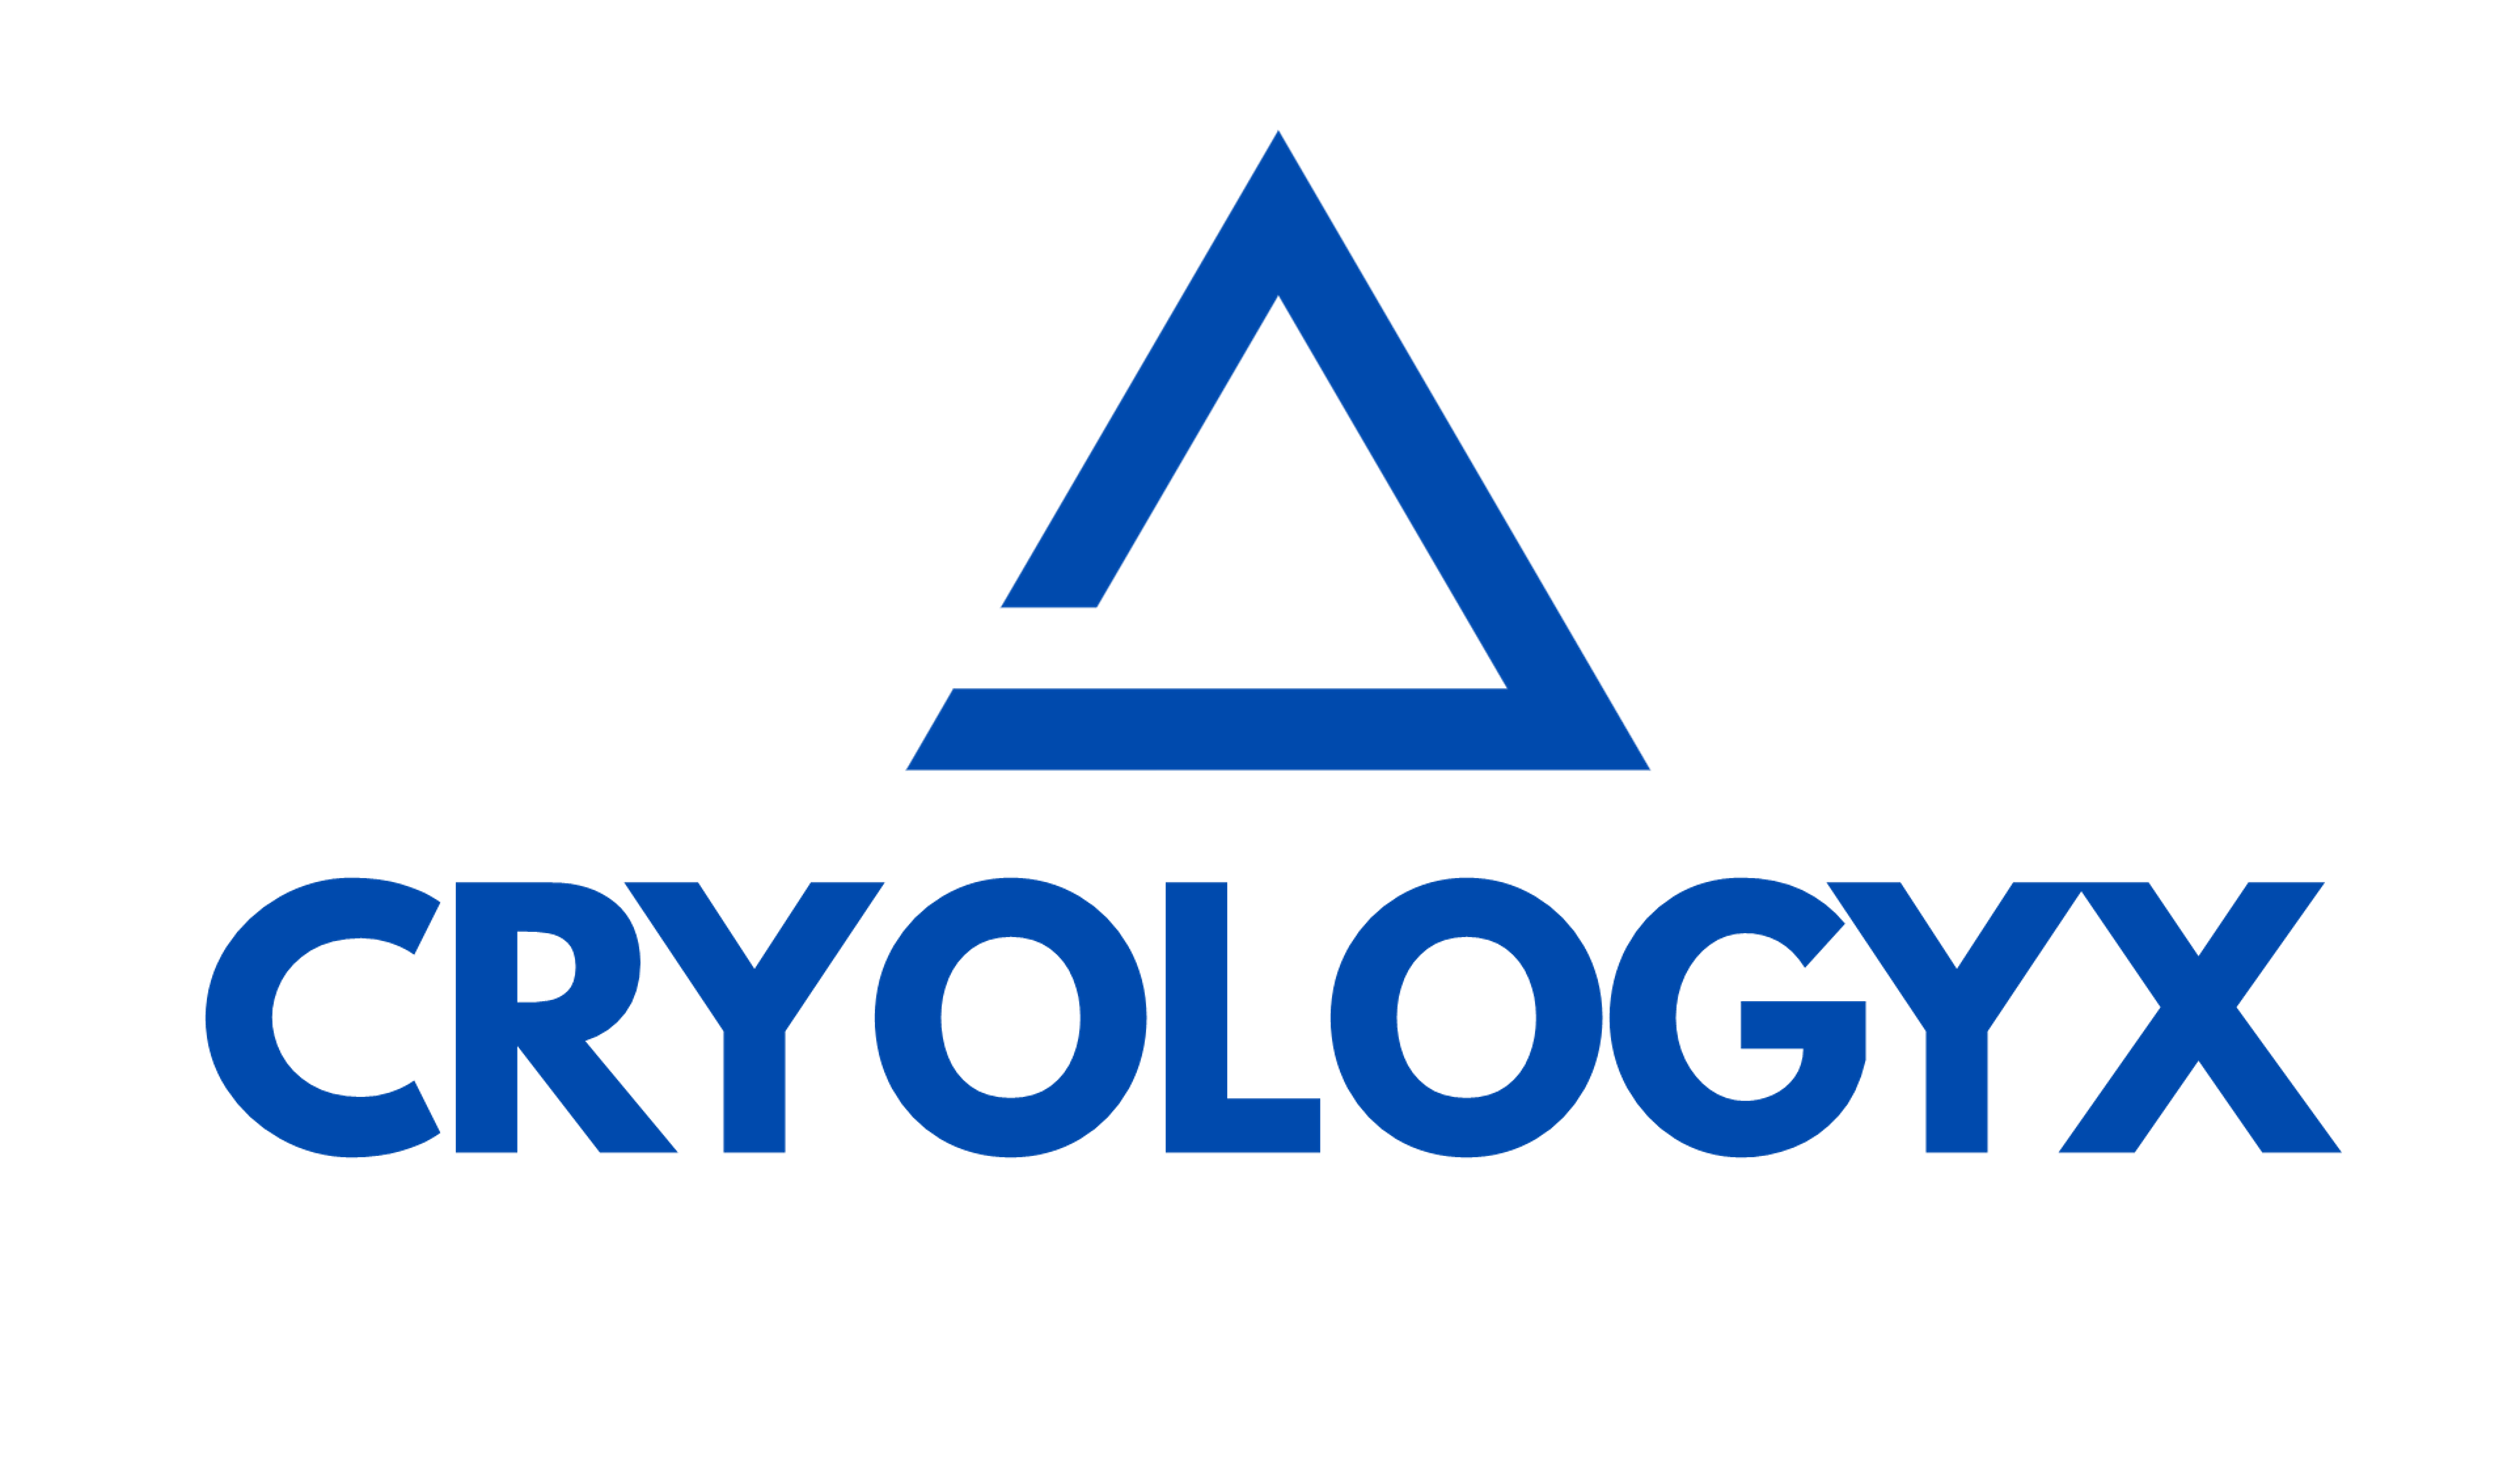 Cryologyx logo